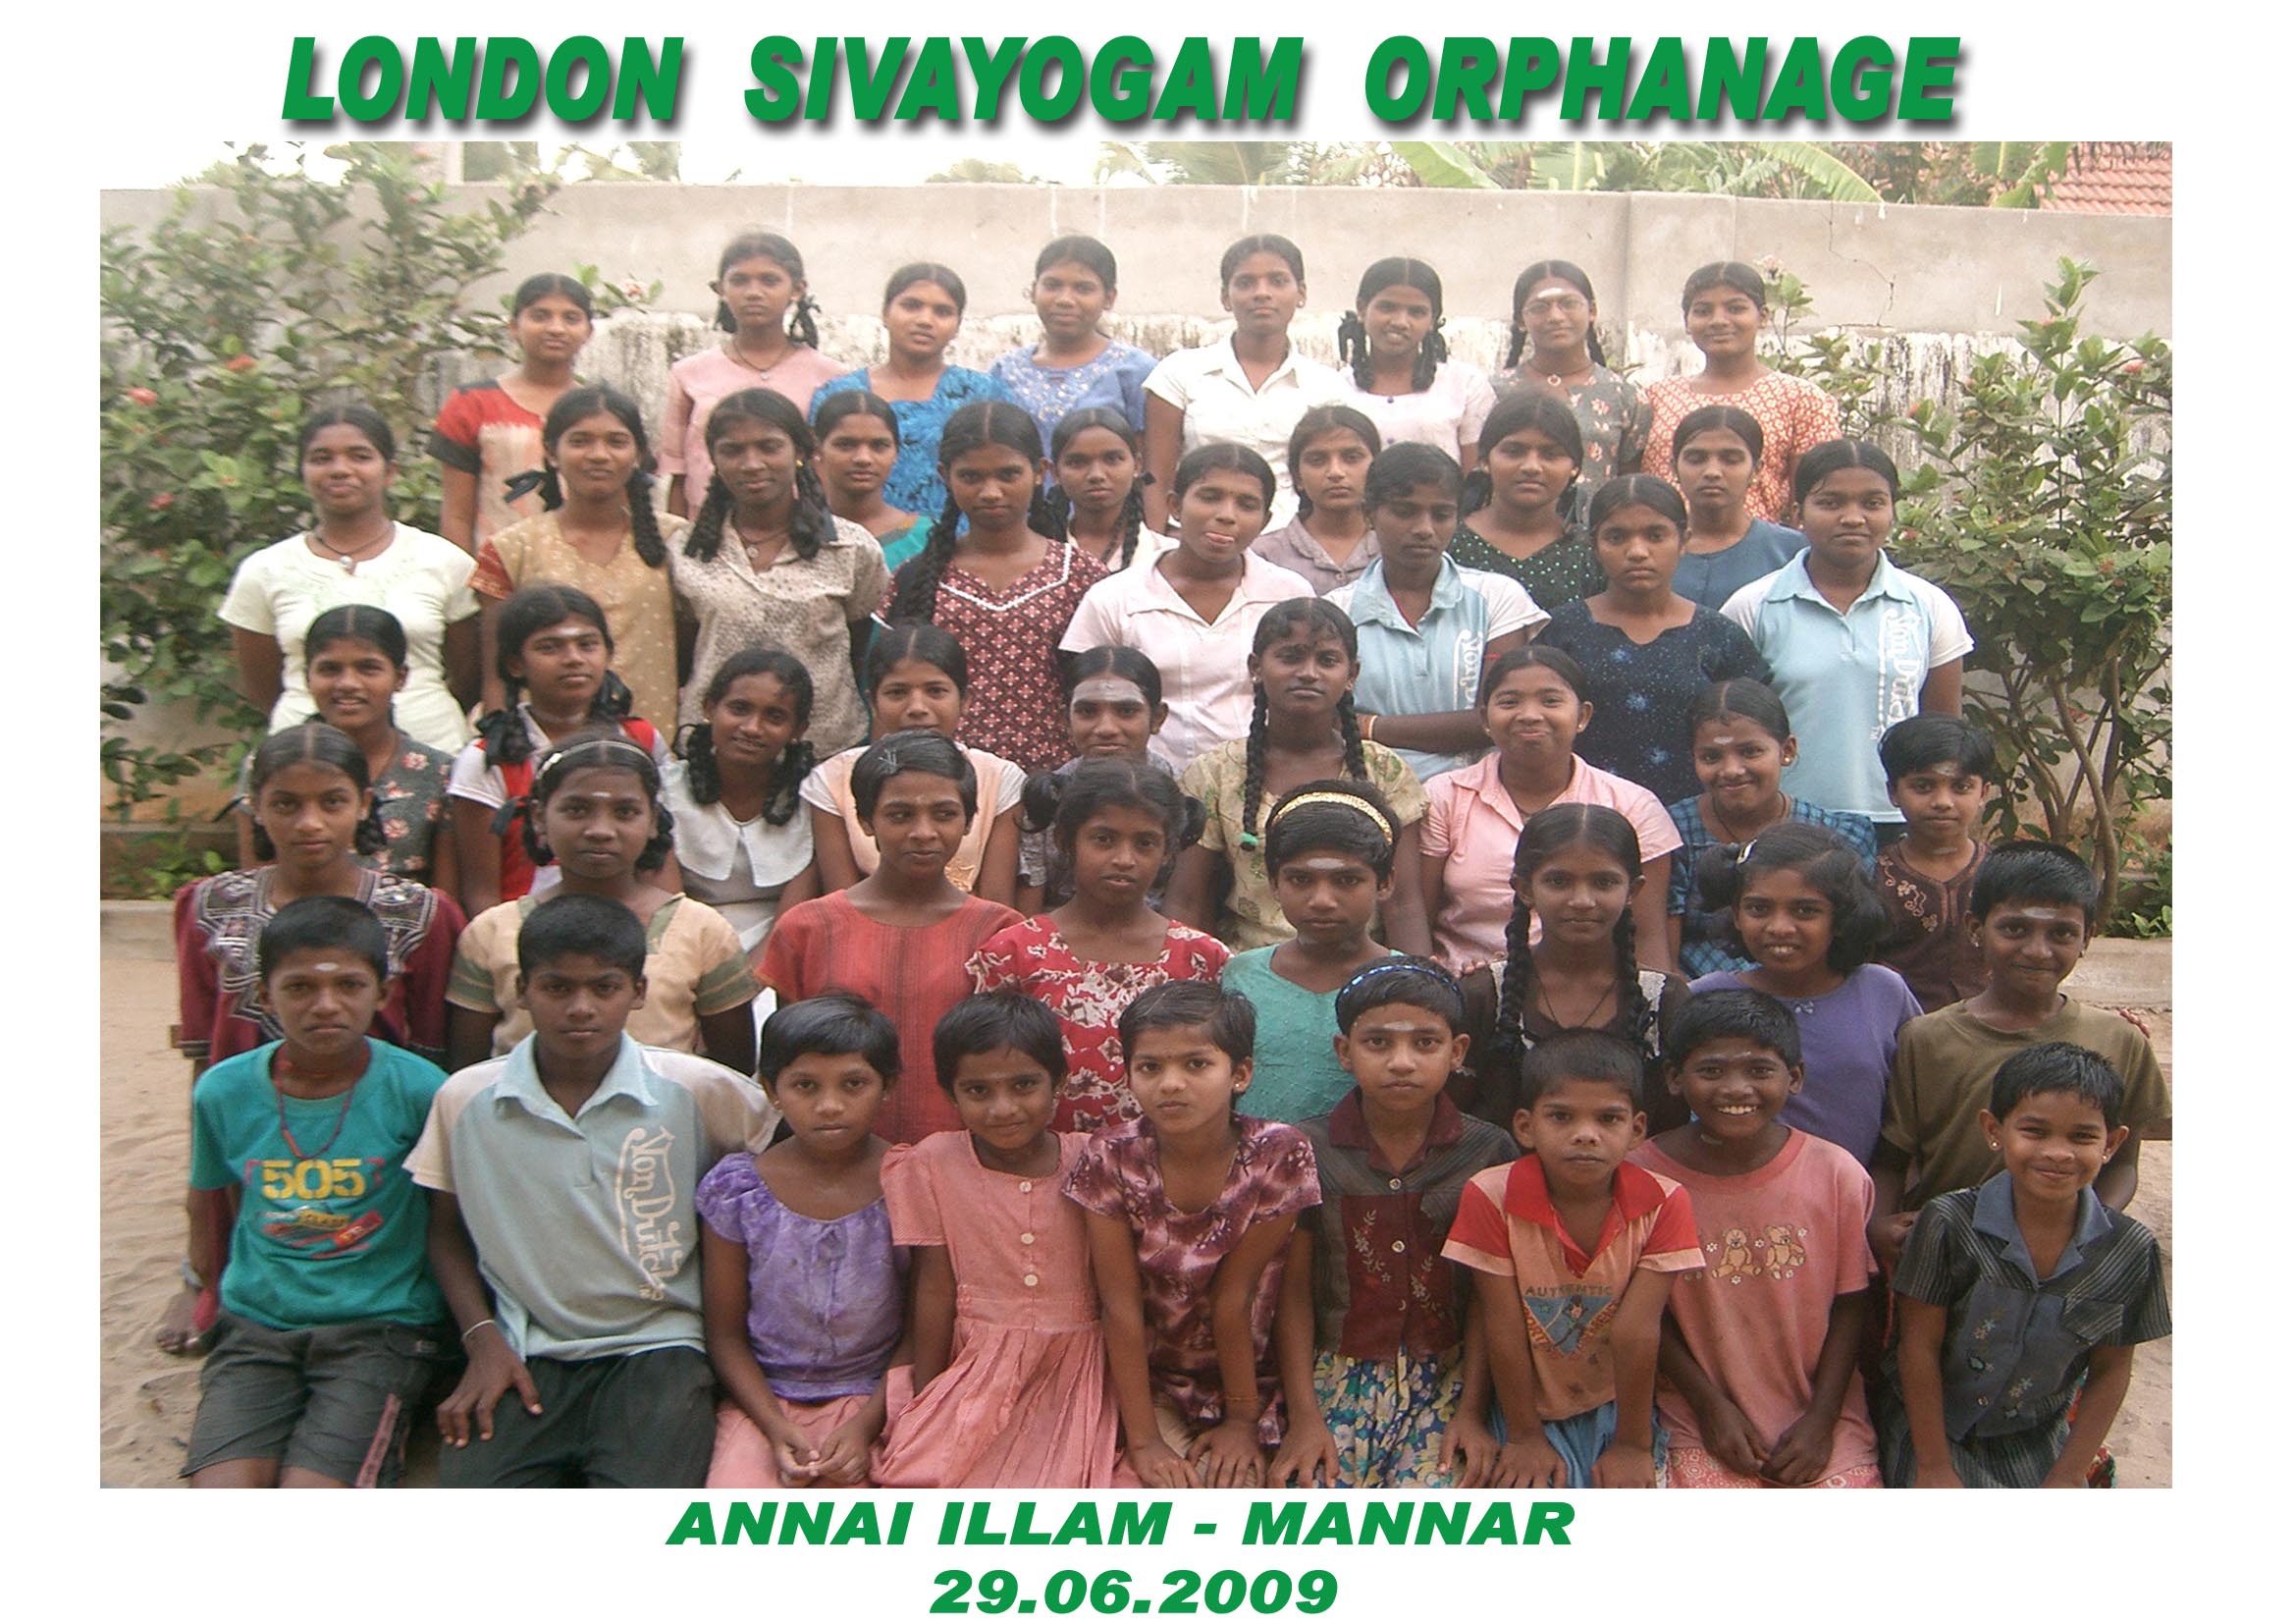 Annai Illam - London Sivayogam Orphanage